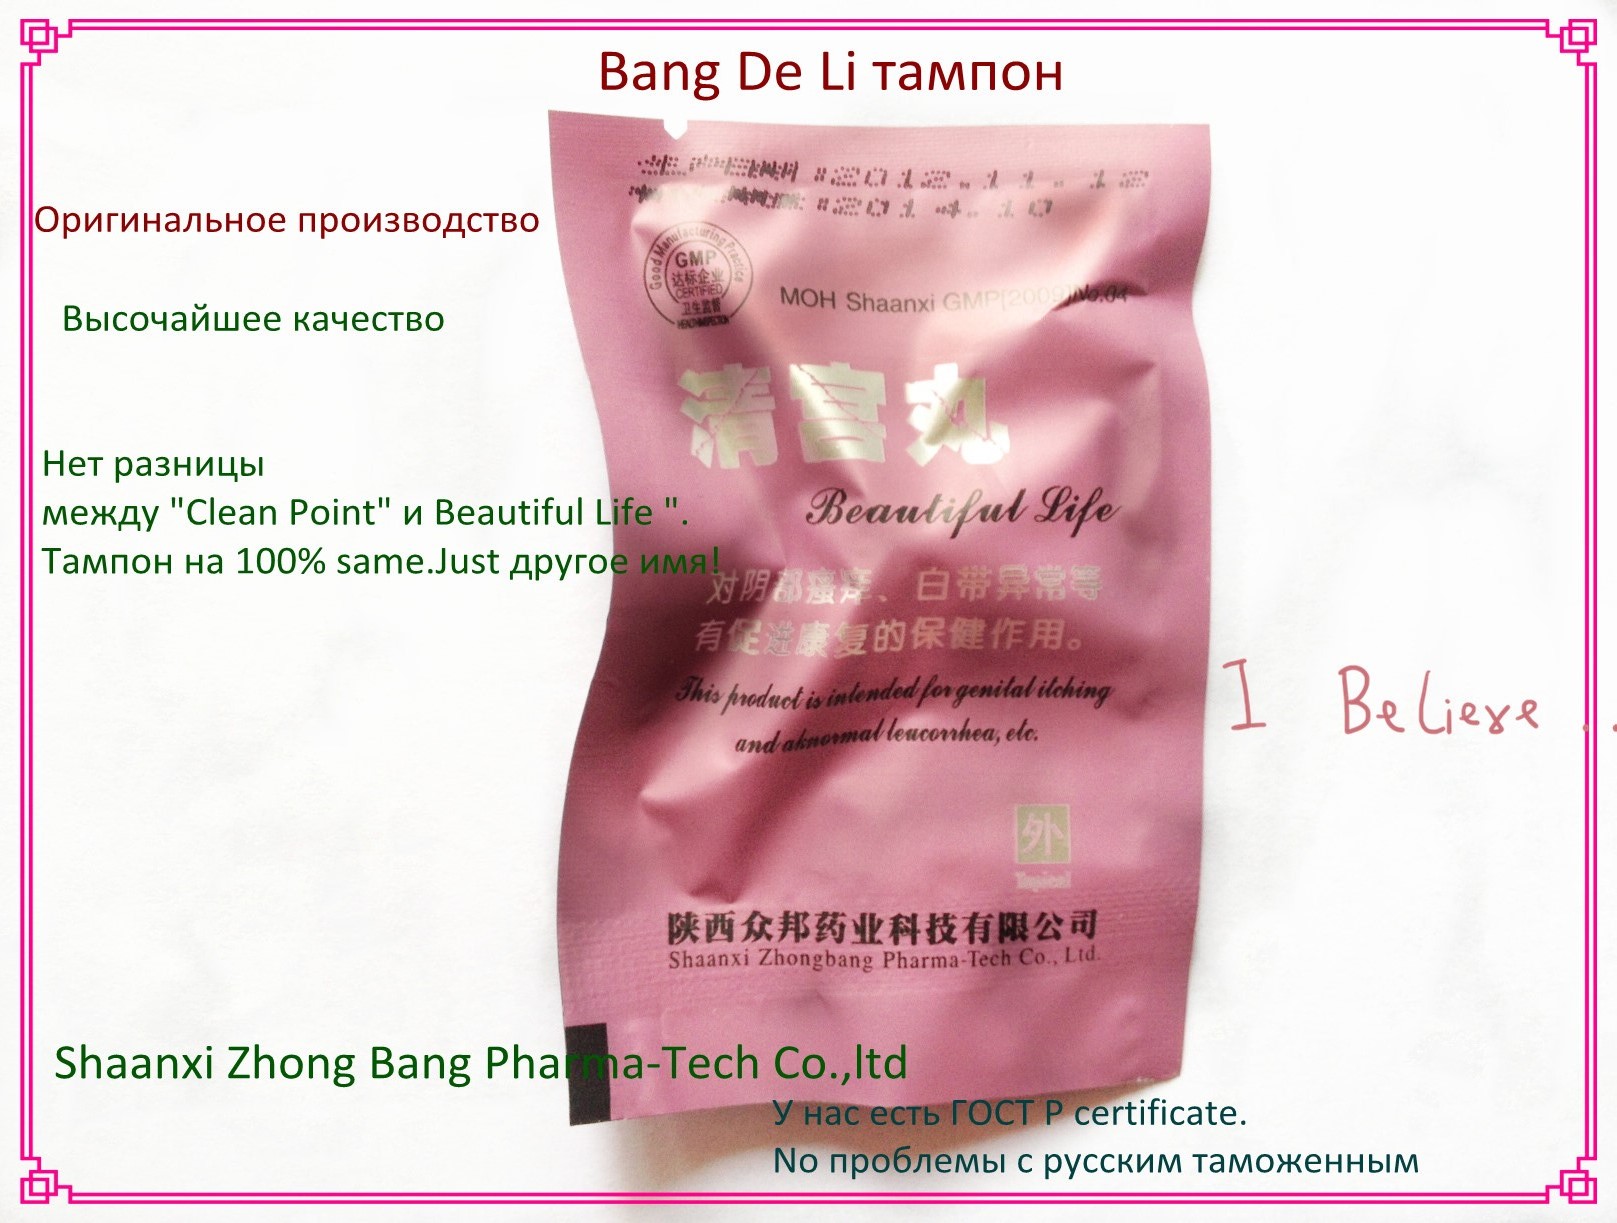 Bang De Li beautiful life tampons 